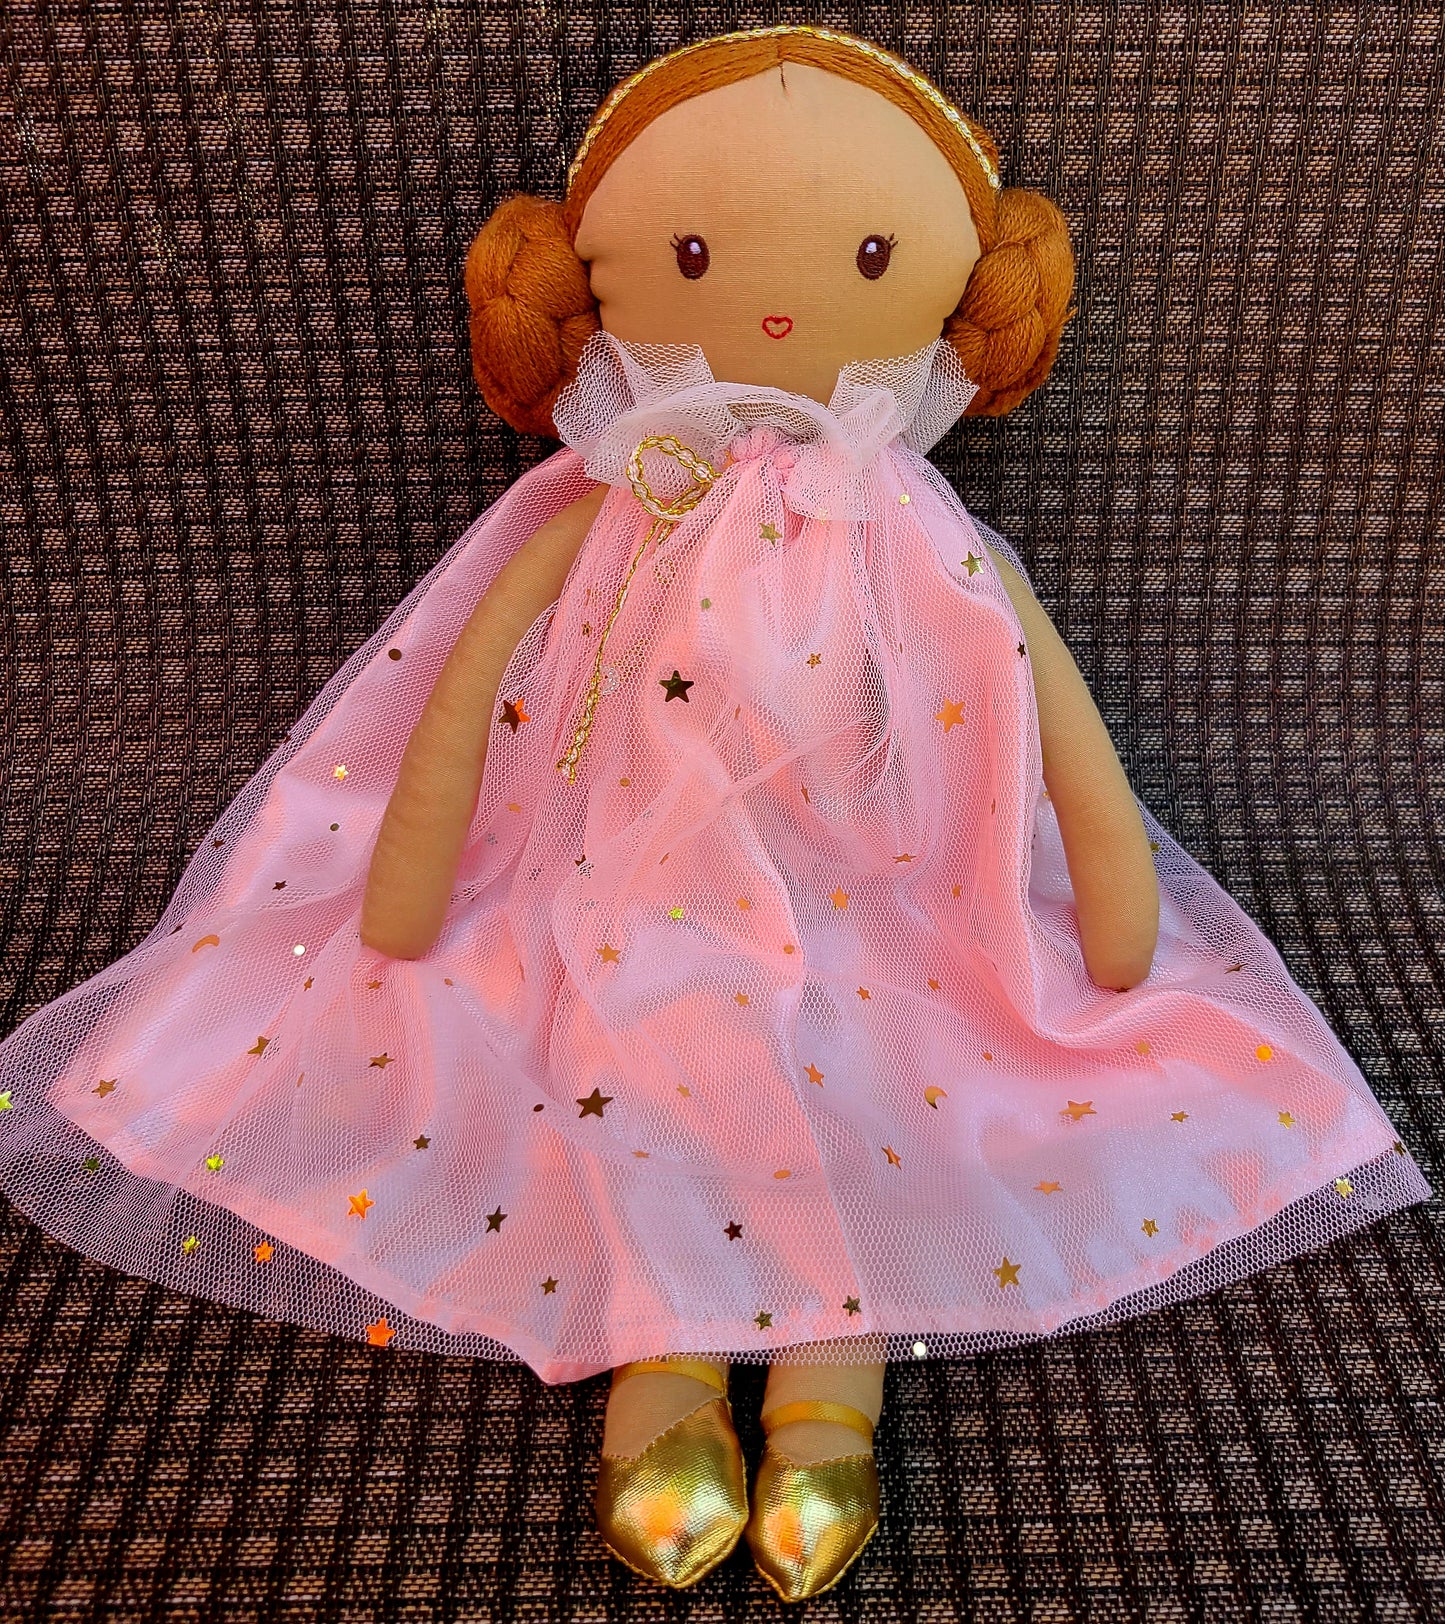 Soft Rag 13in Tan Skin Baby Girl Ballerina Dressing Dolls Plush Toy/ Decorative Plush Doll/ Handmade Baby Gift Toy